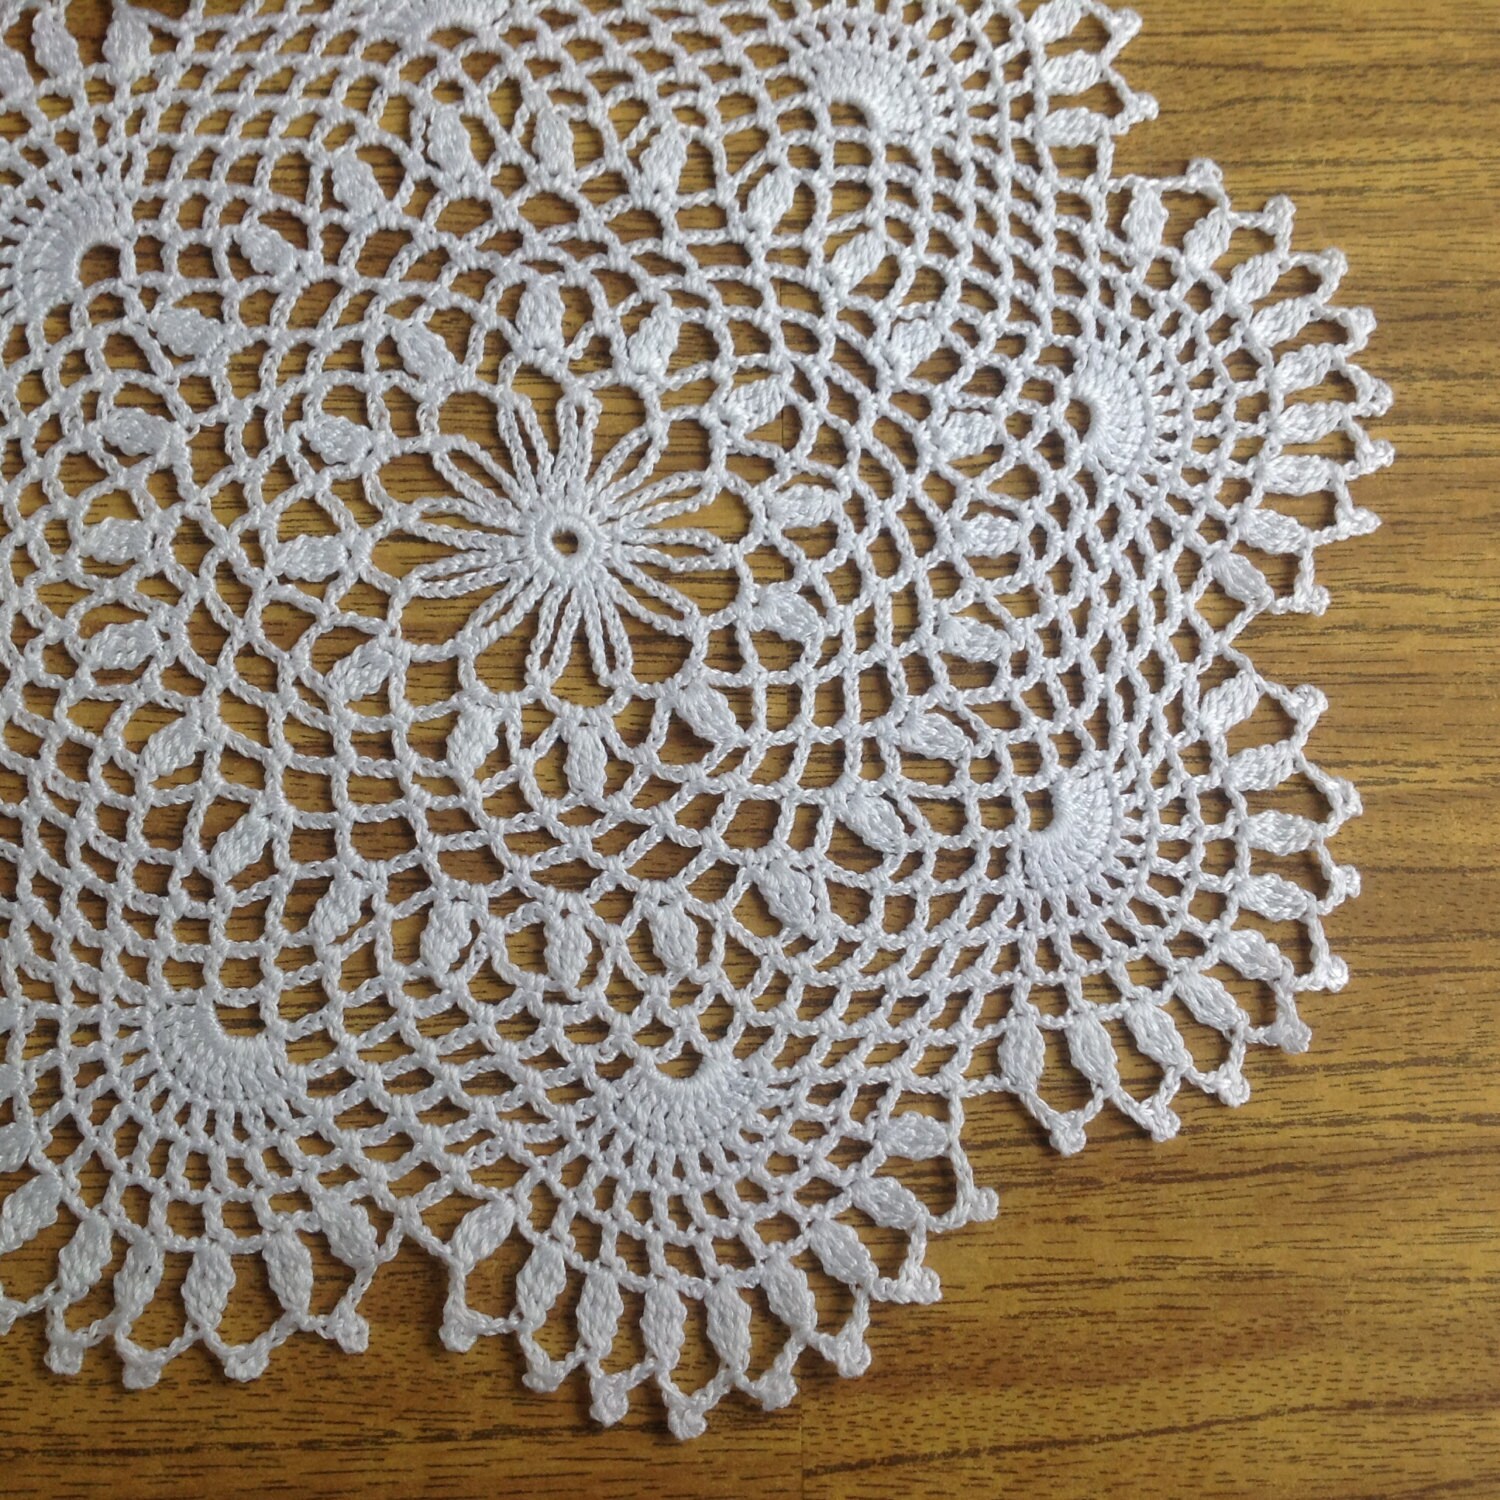 White or Beige Crochet Napkin Crochet Doily Handcrafted Home | Etsy